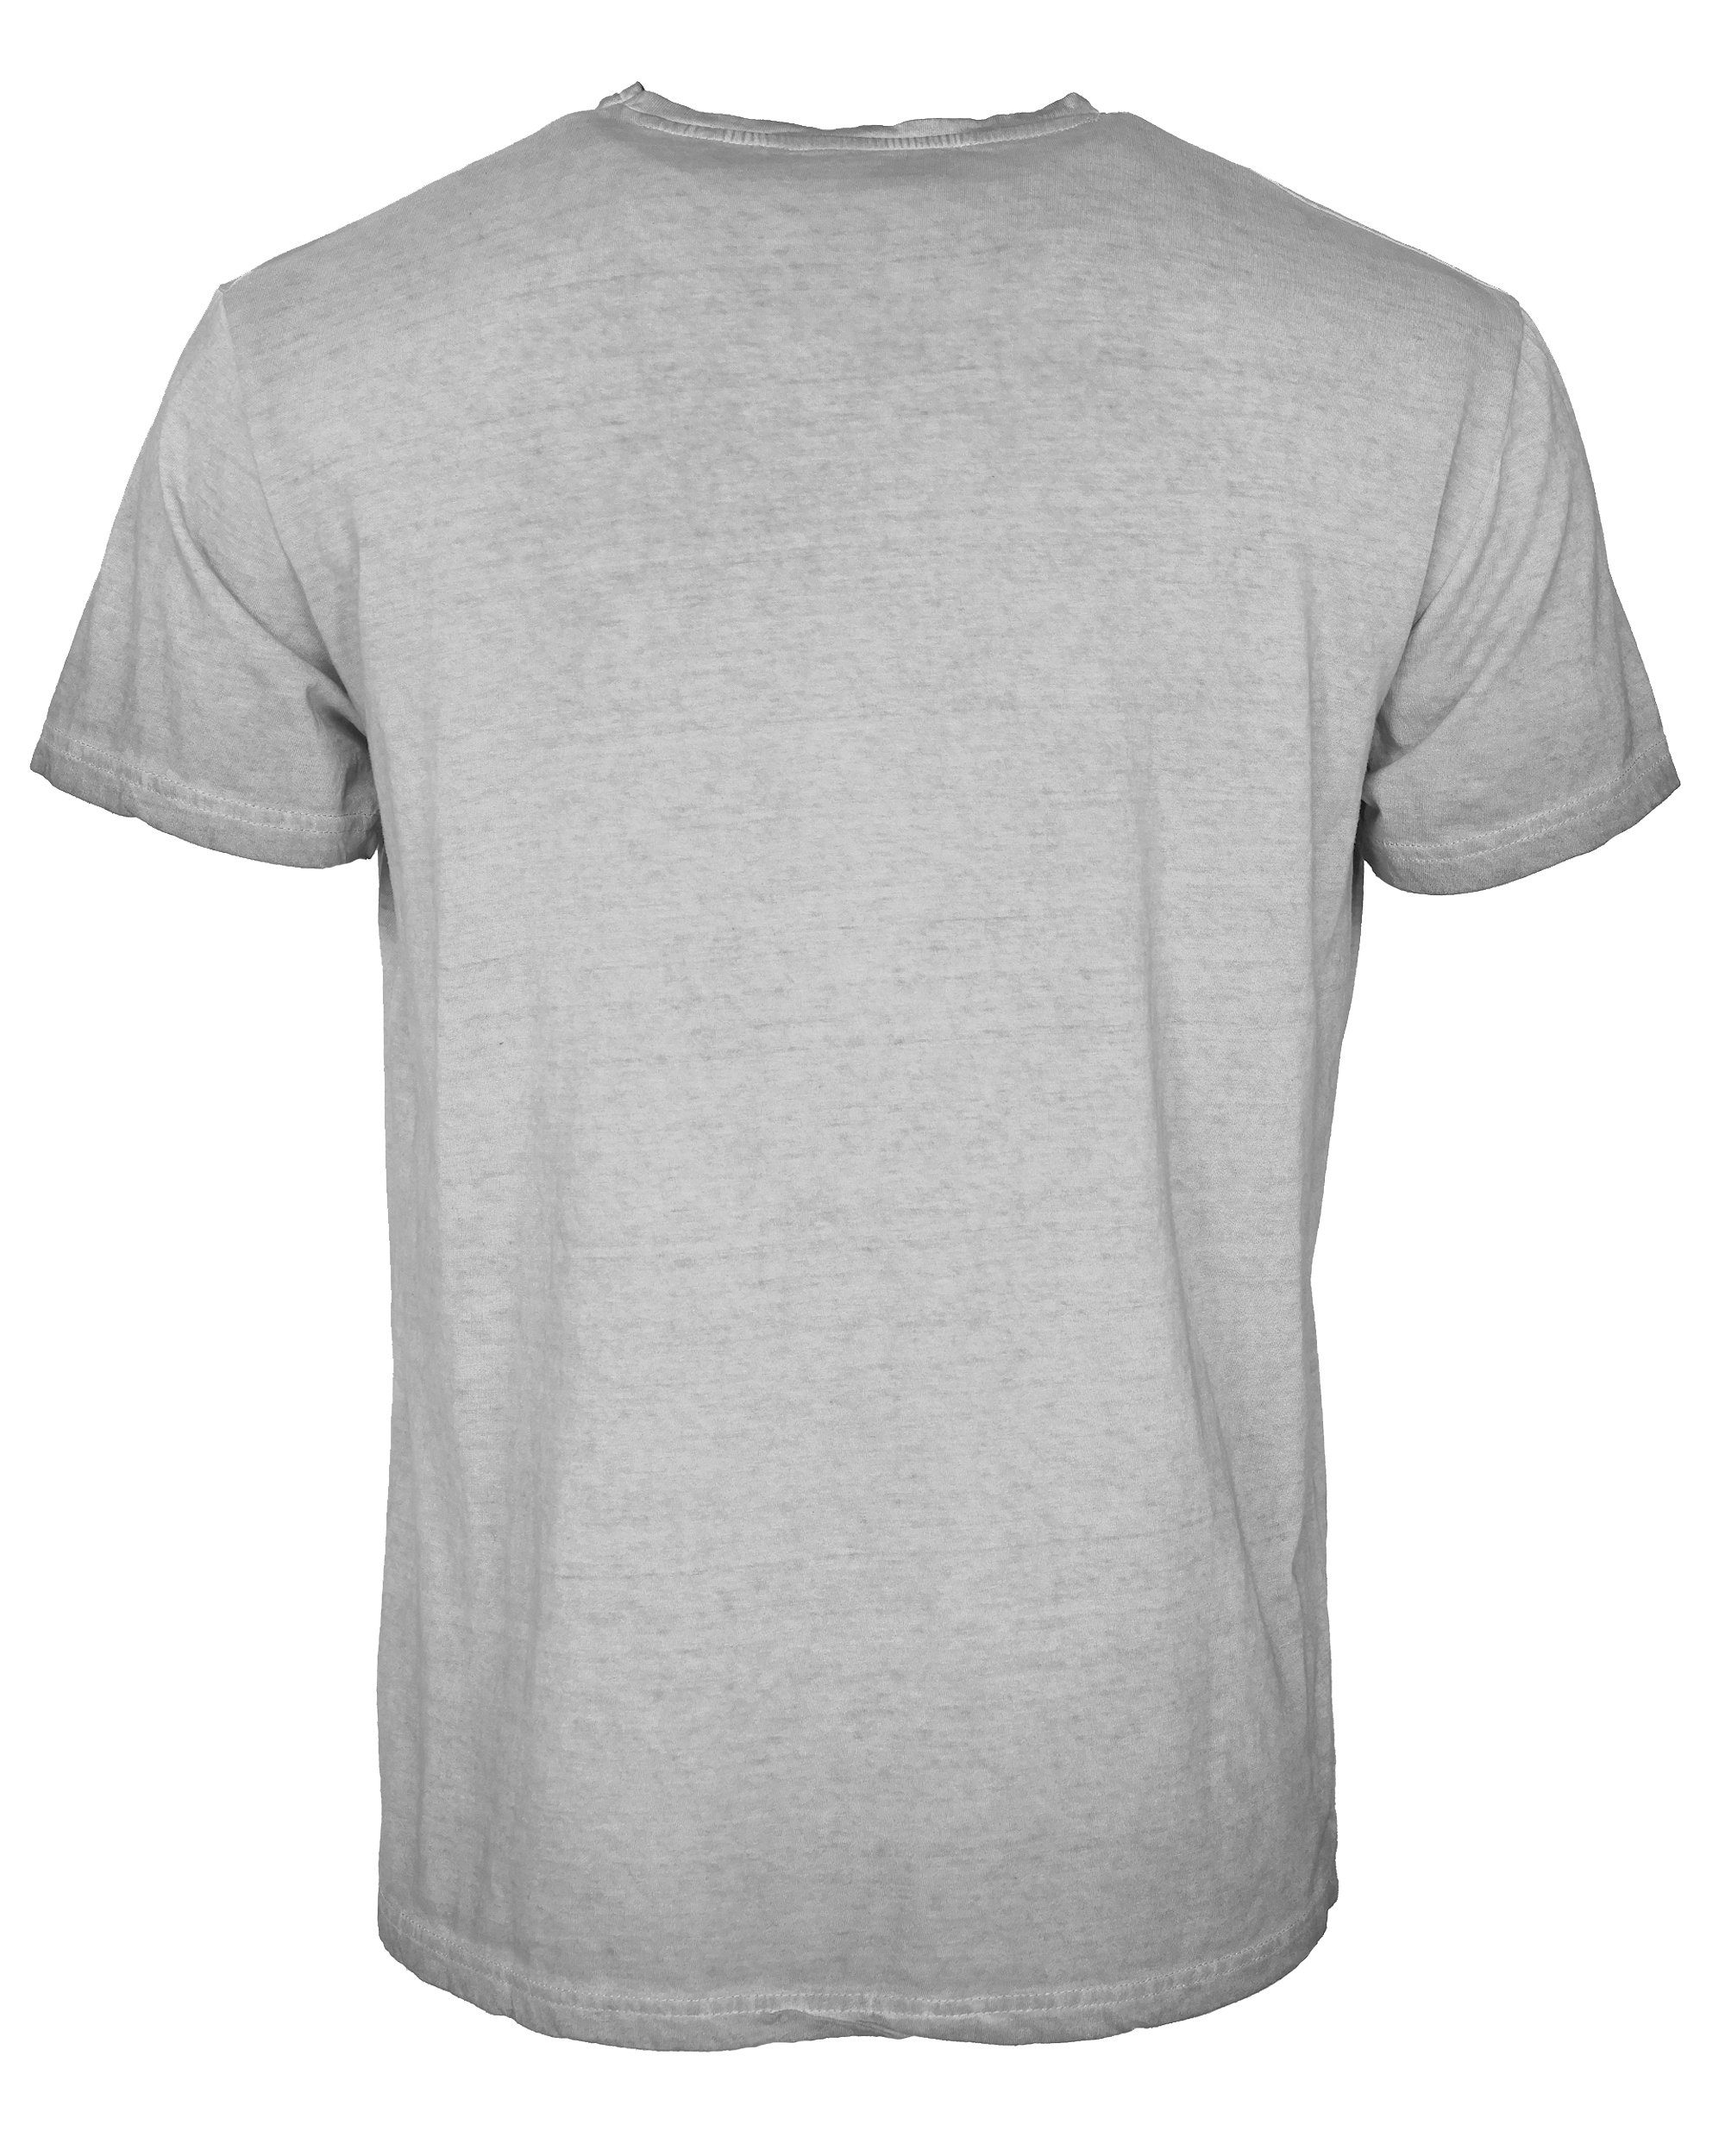 light grey TG20212103 TOP GUN T-Shirt